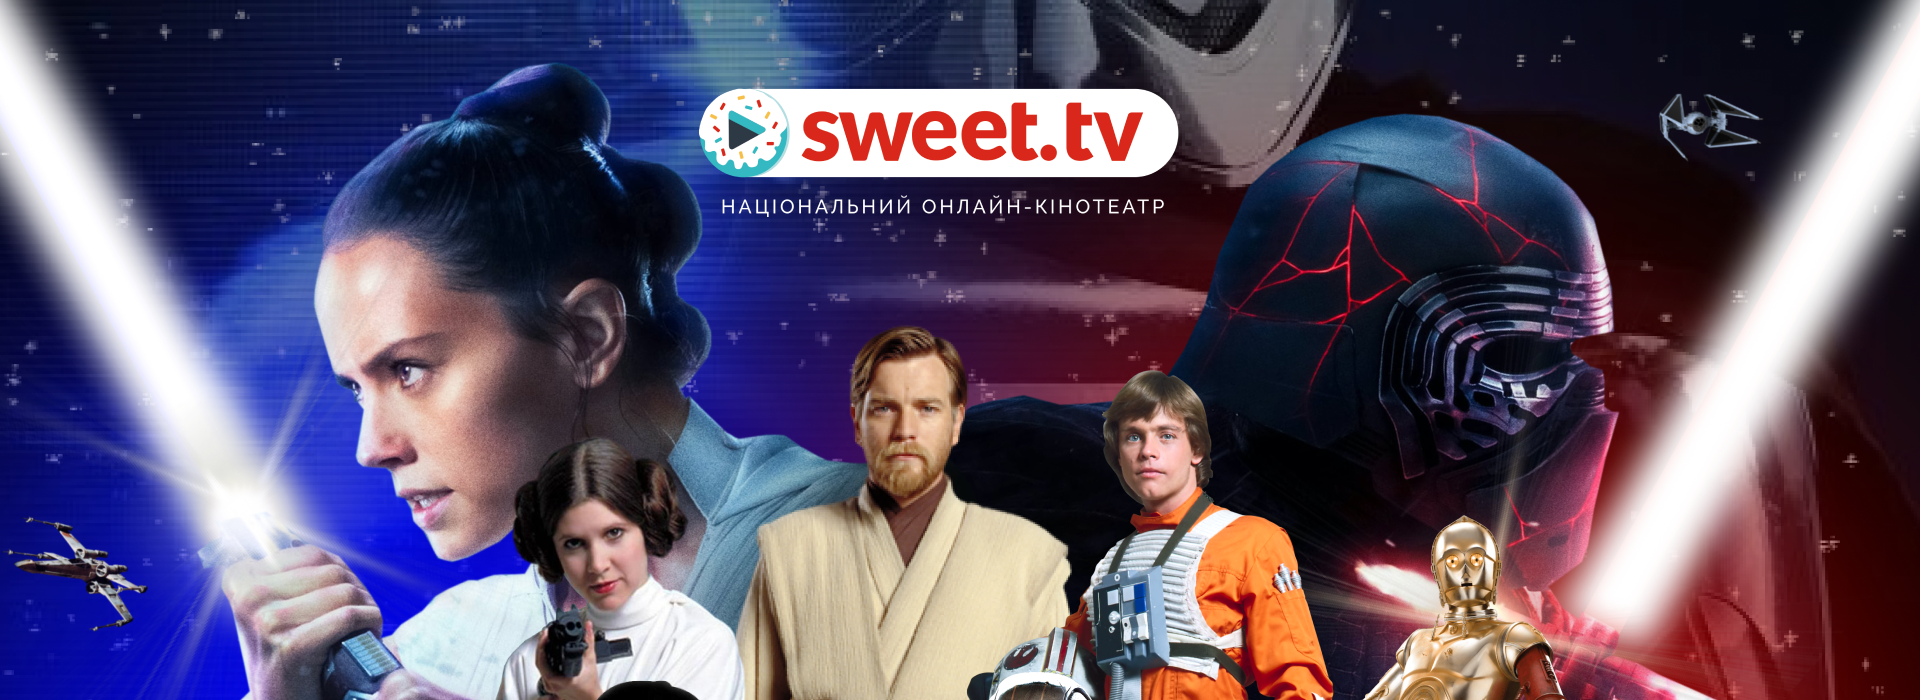 40 Years of Cinema in 2 Weeks: SWEET.TV Opened Access to All Films of the Star Wars Saga